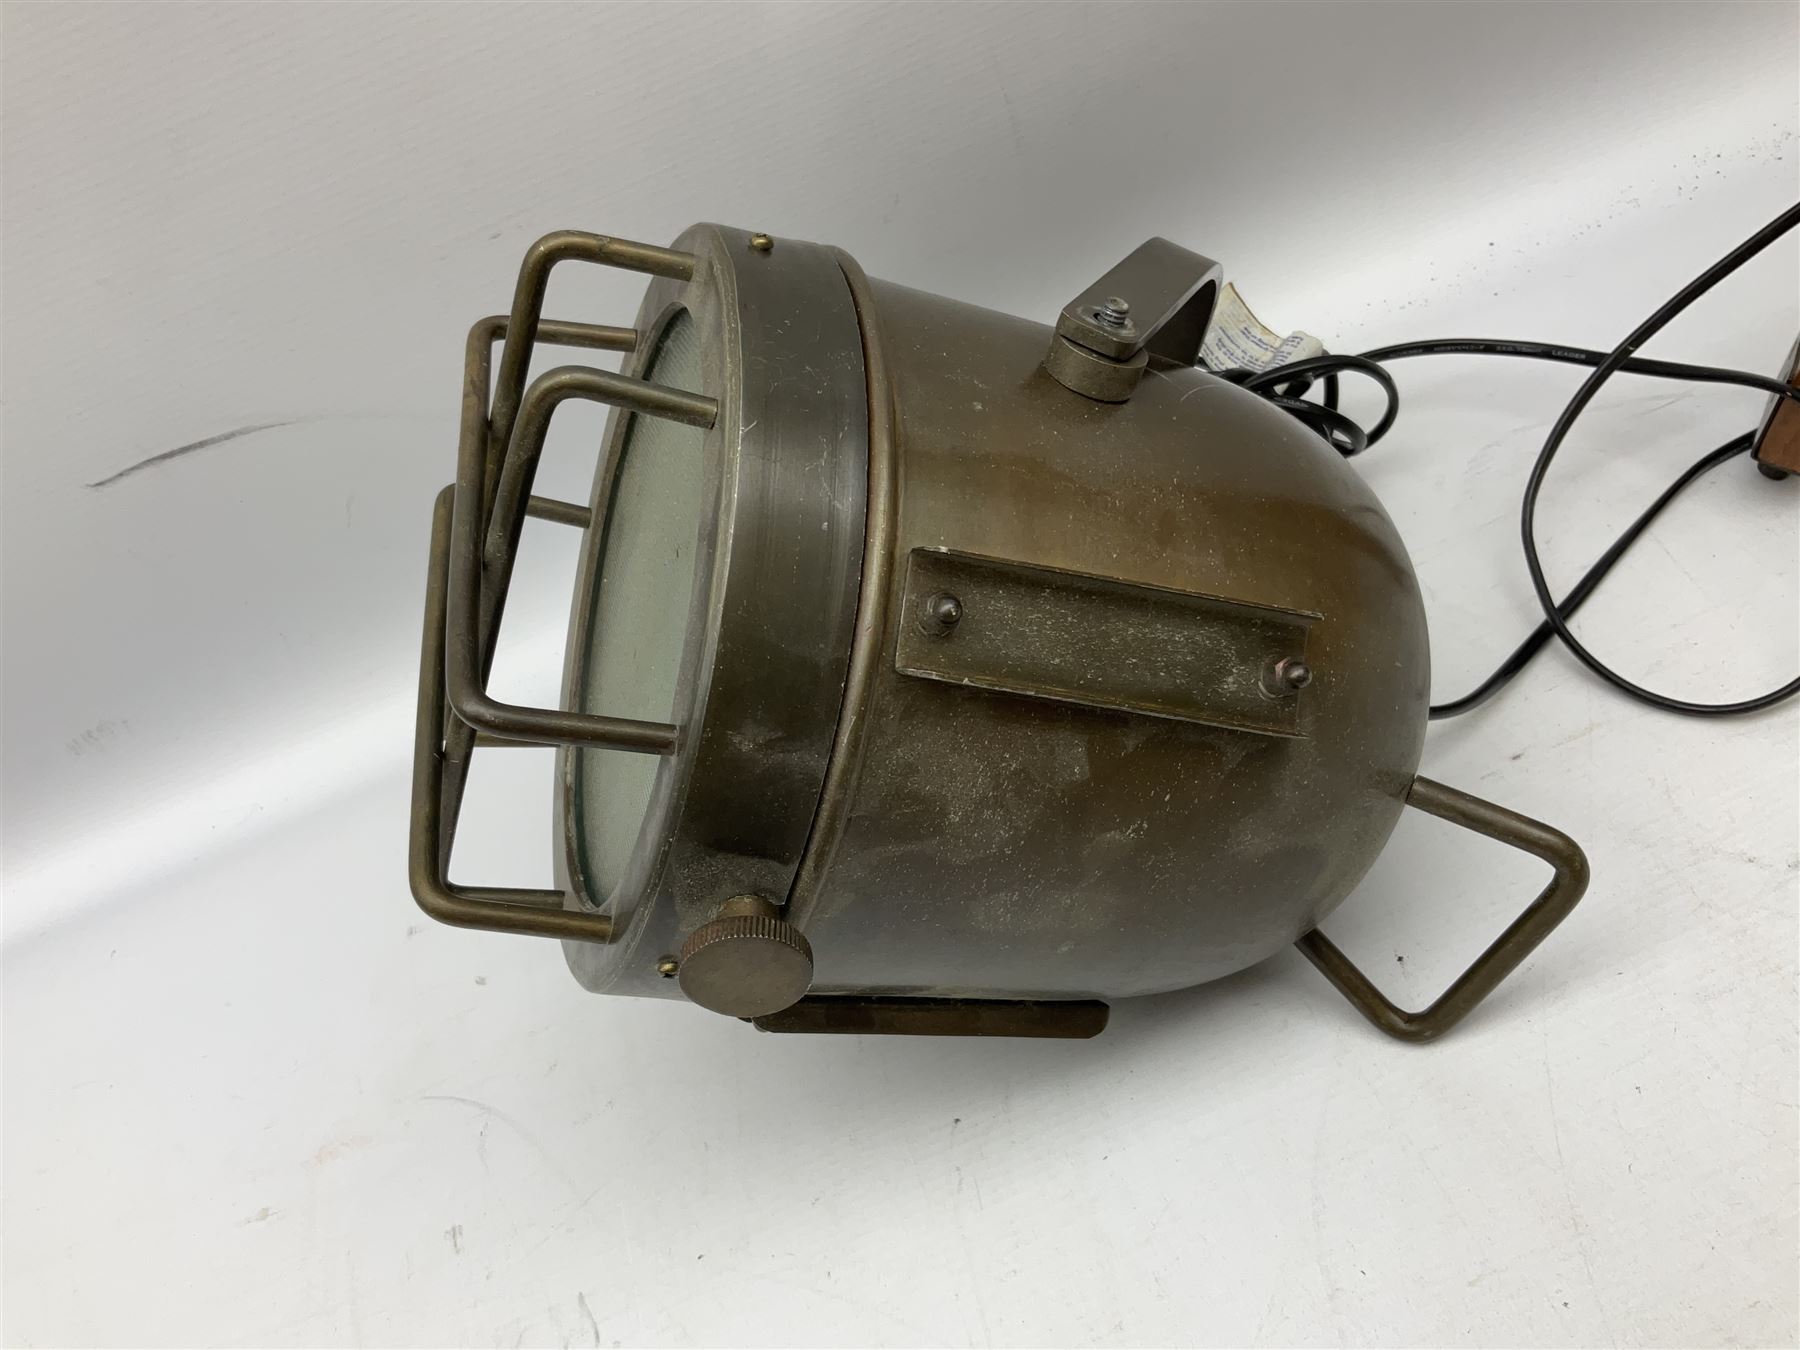 Reproduction metal spot light/lamp upon a wooden three leg tripod base - Image 3 of 4